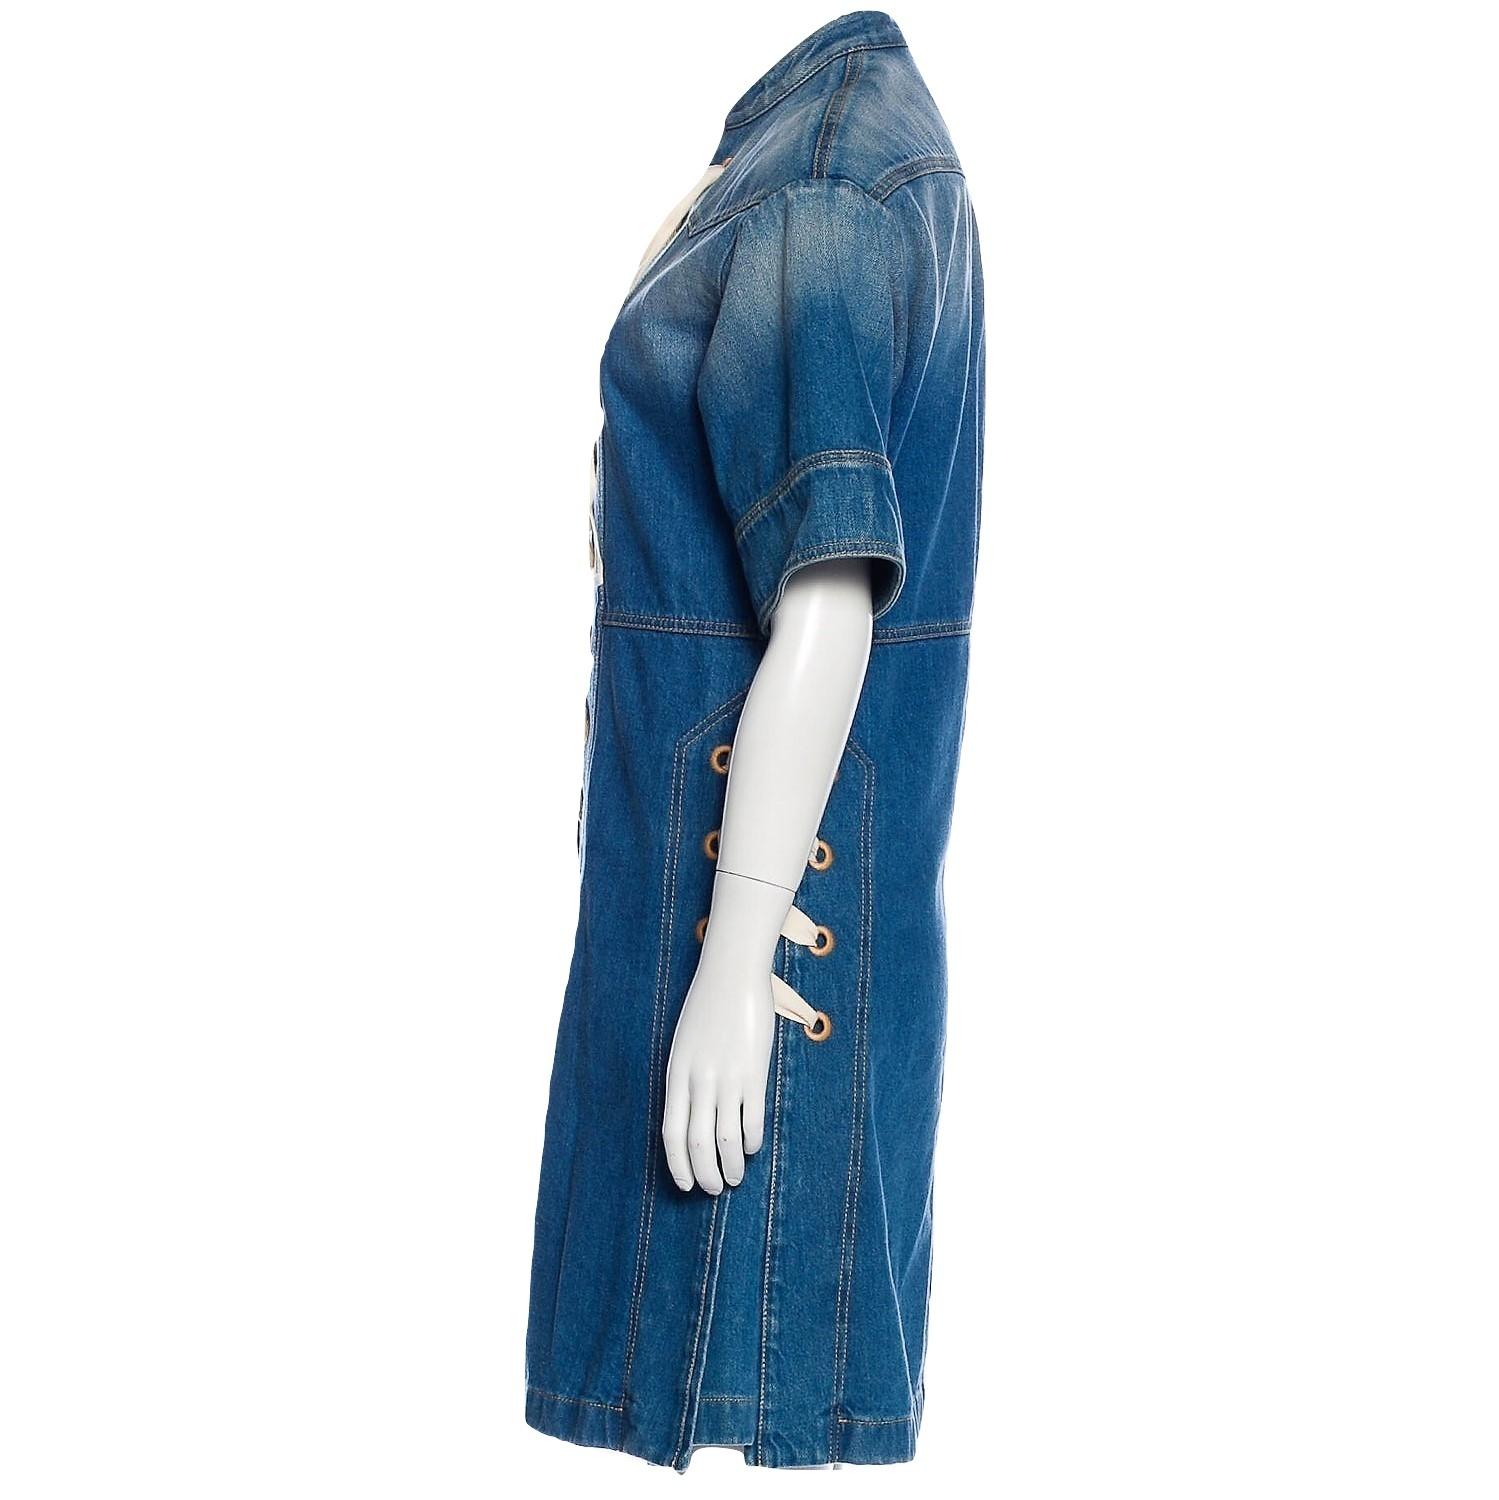 New Rare Gucci Runway Ad Denim Dress S/S 2015 Sz 40 $2950 For Sale 2